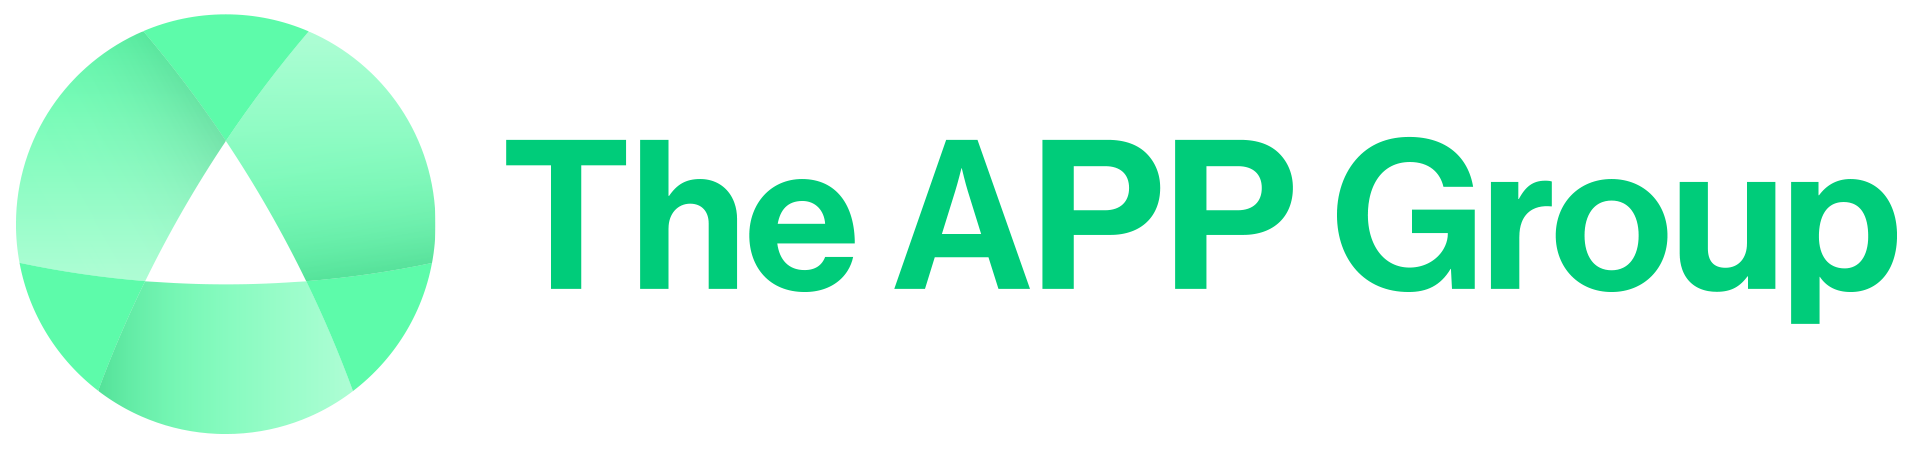 The APP Group Logo